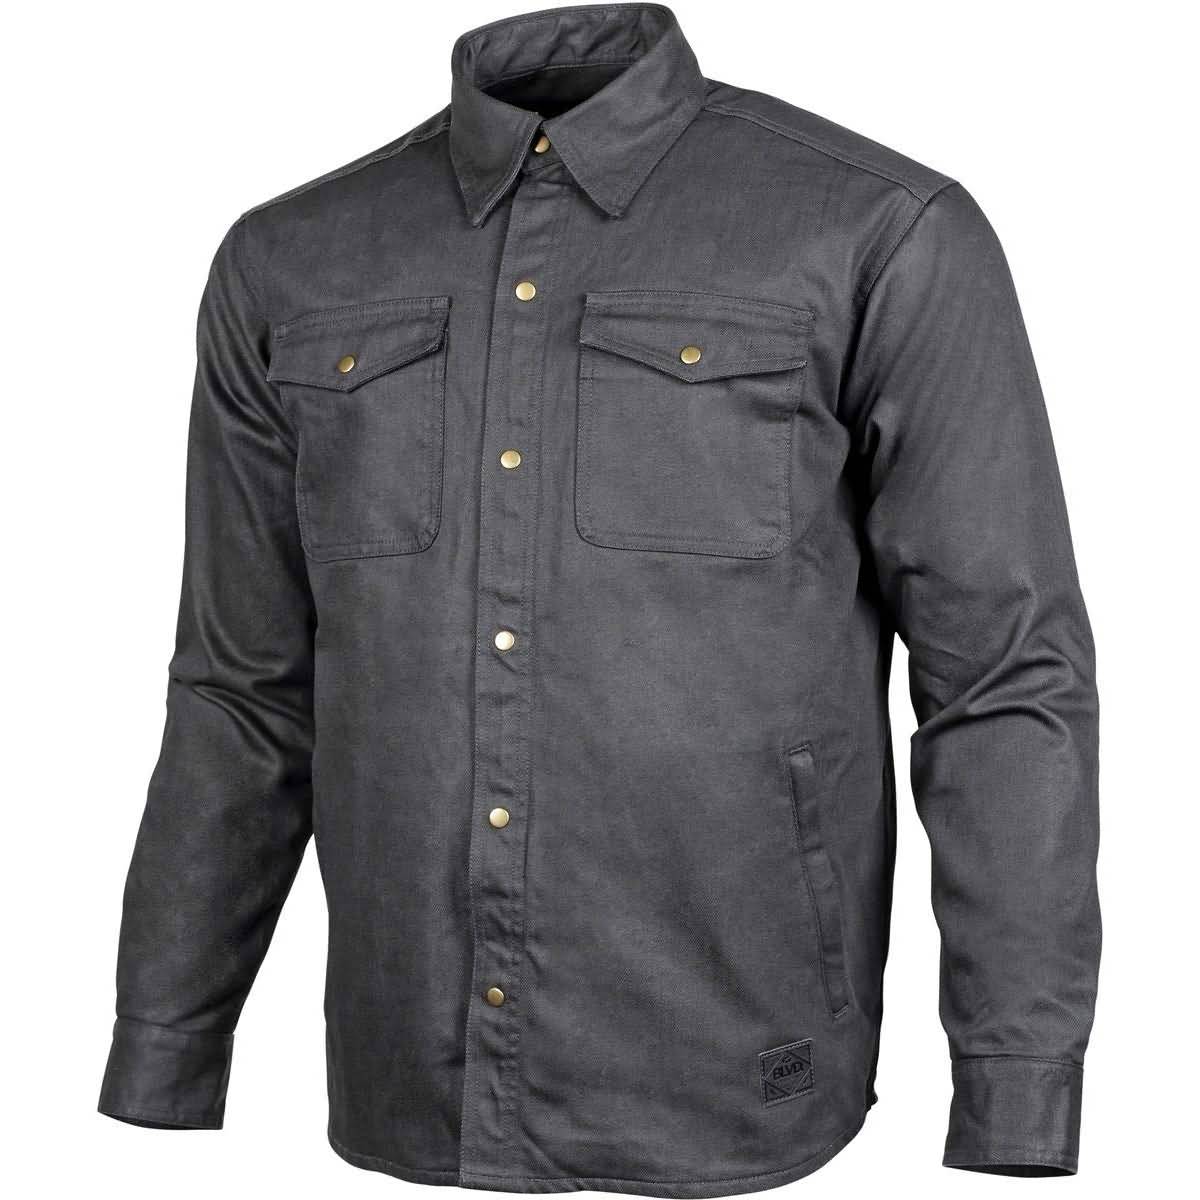 Cortech The Voodoo Men's Button Up Short-Sleeve Shirts-8102